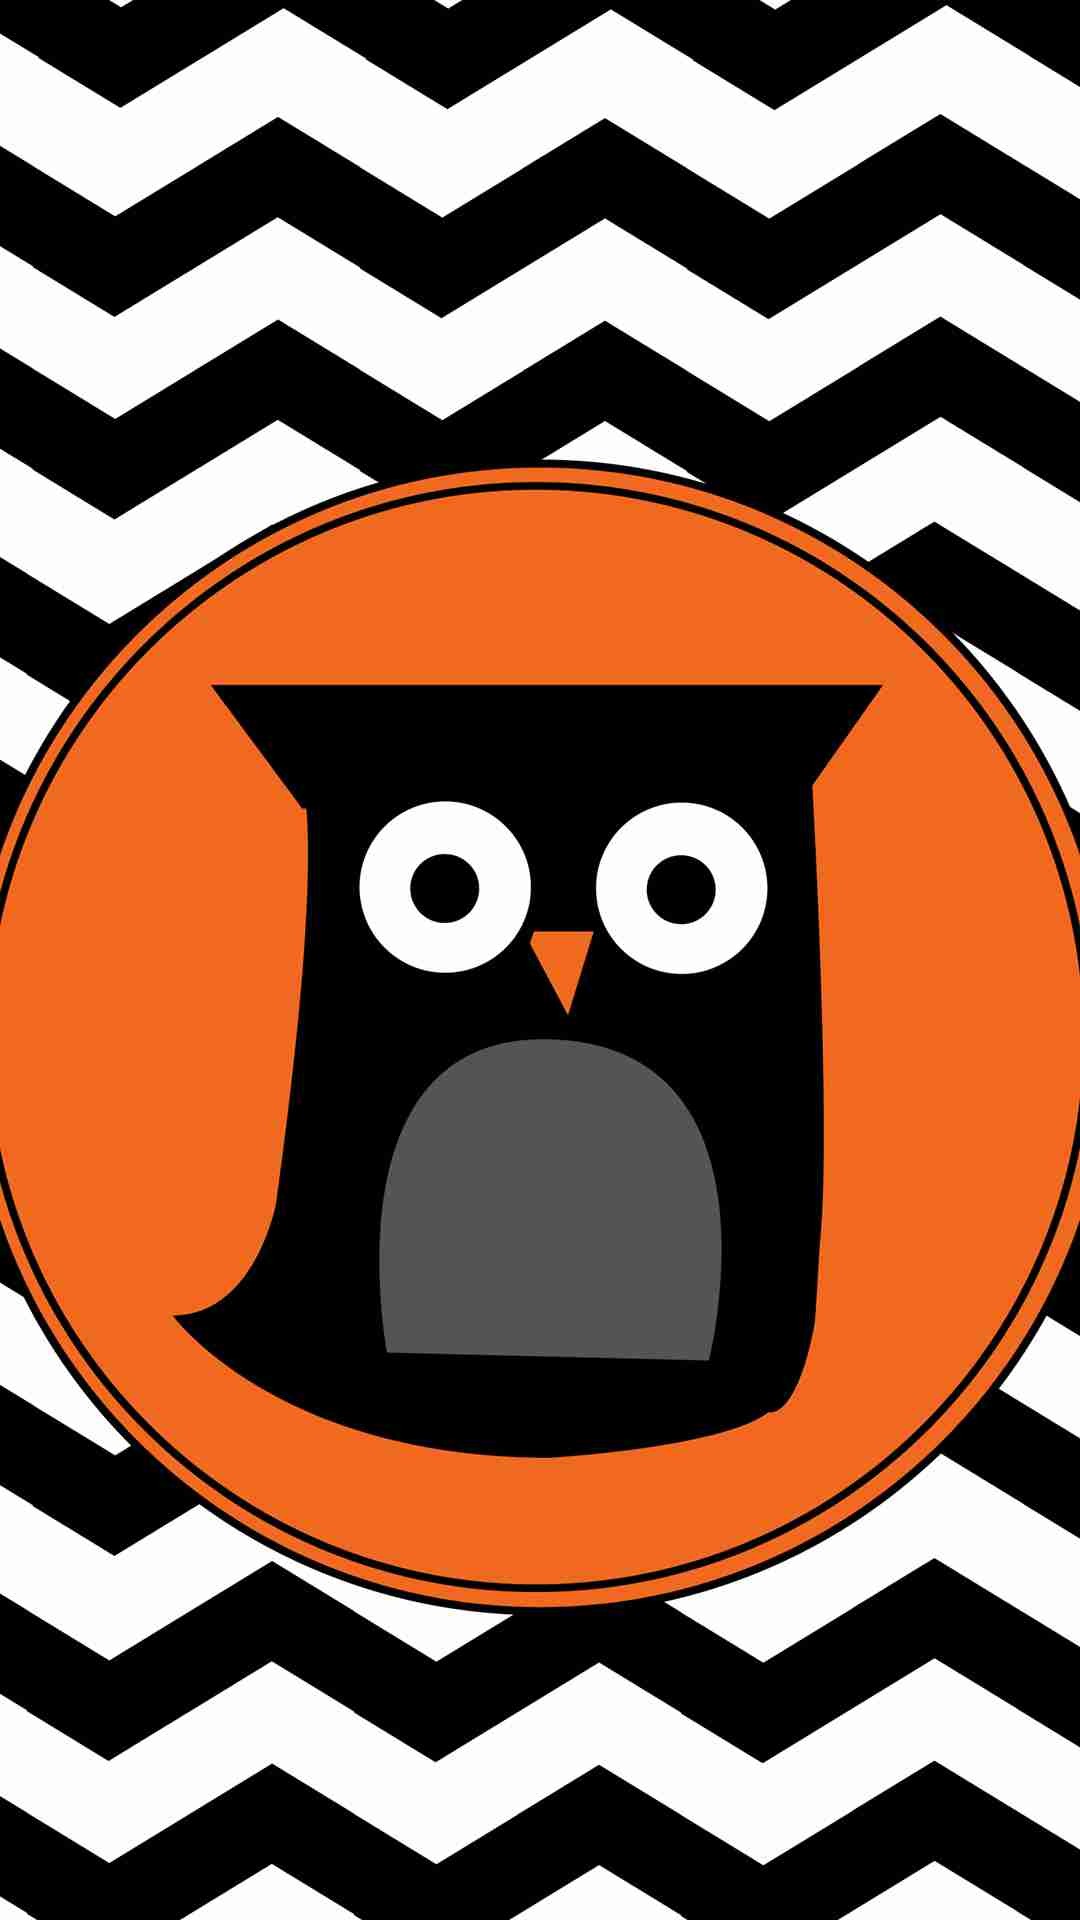 Cartoon Owl and Chevron Pattern iPhone 6 Plus Wallpaper